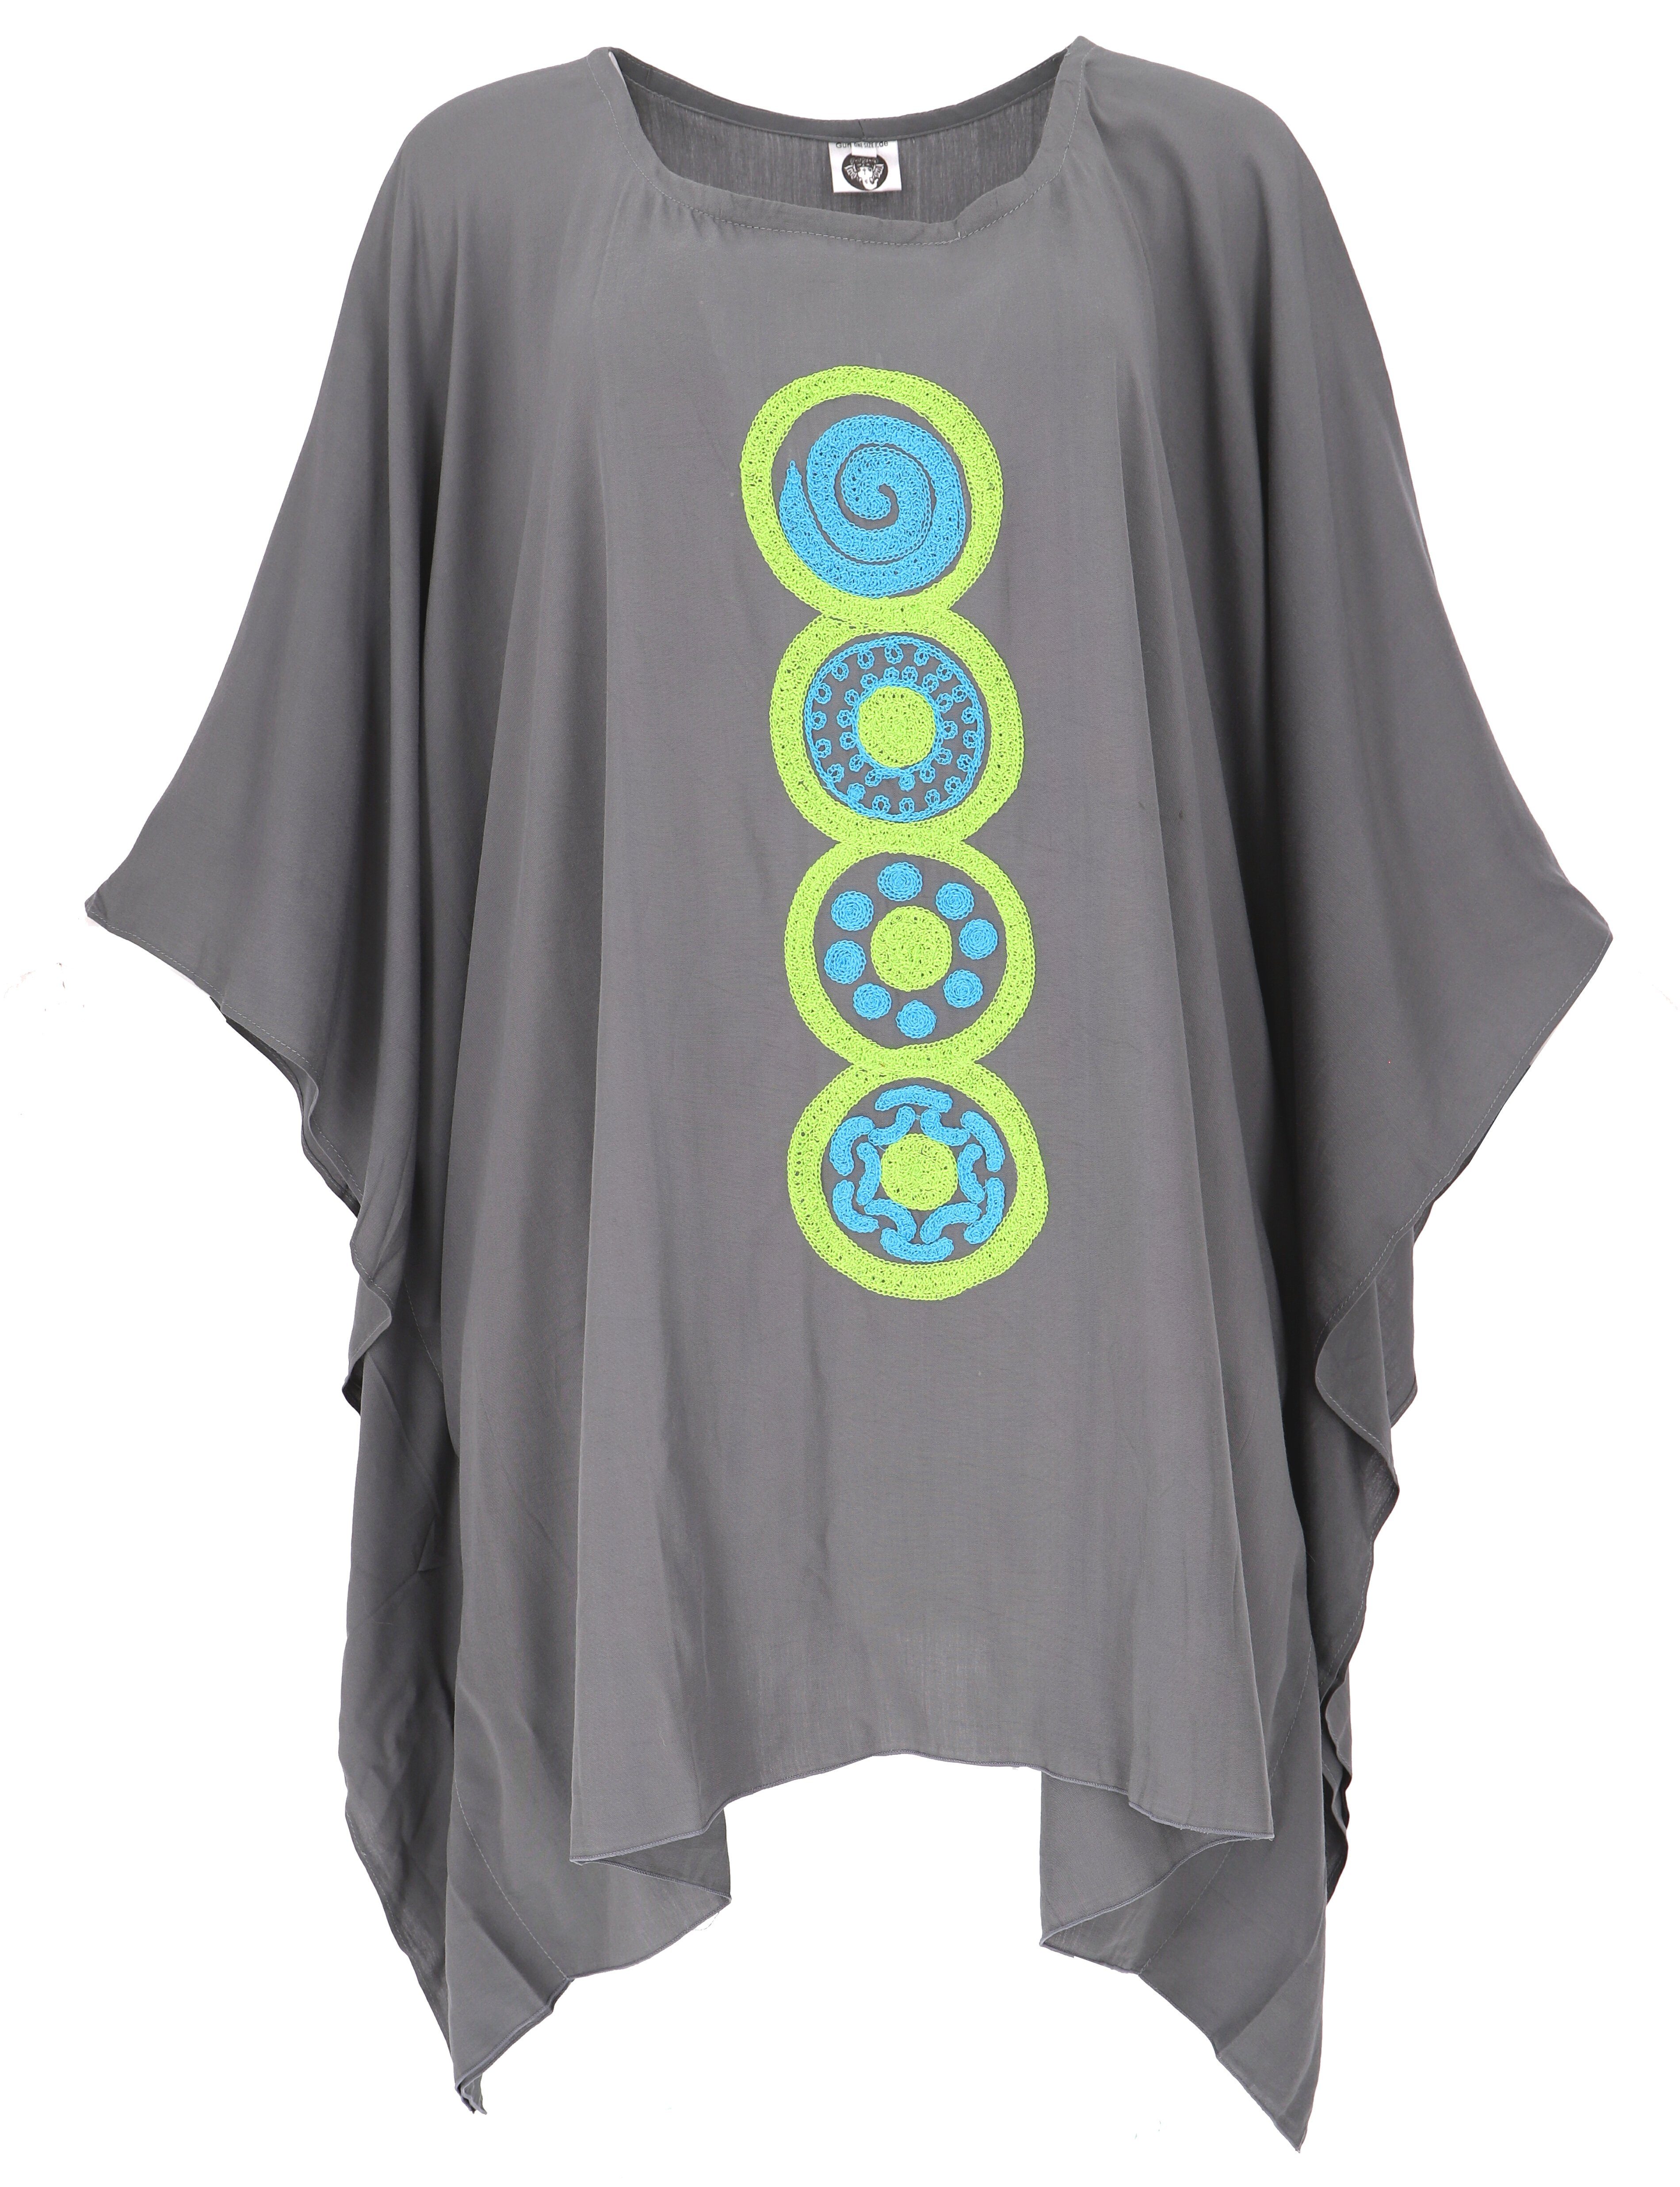 Bekleidung Ponchokleid, alternative Hippie Guru-Shop Longbluse grau Minikleid.. Besticktes